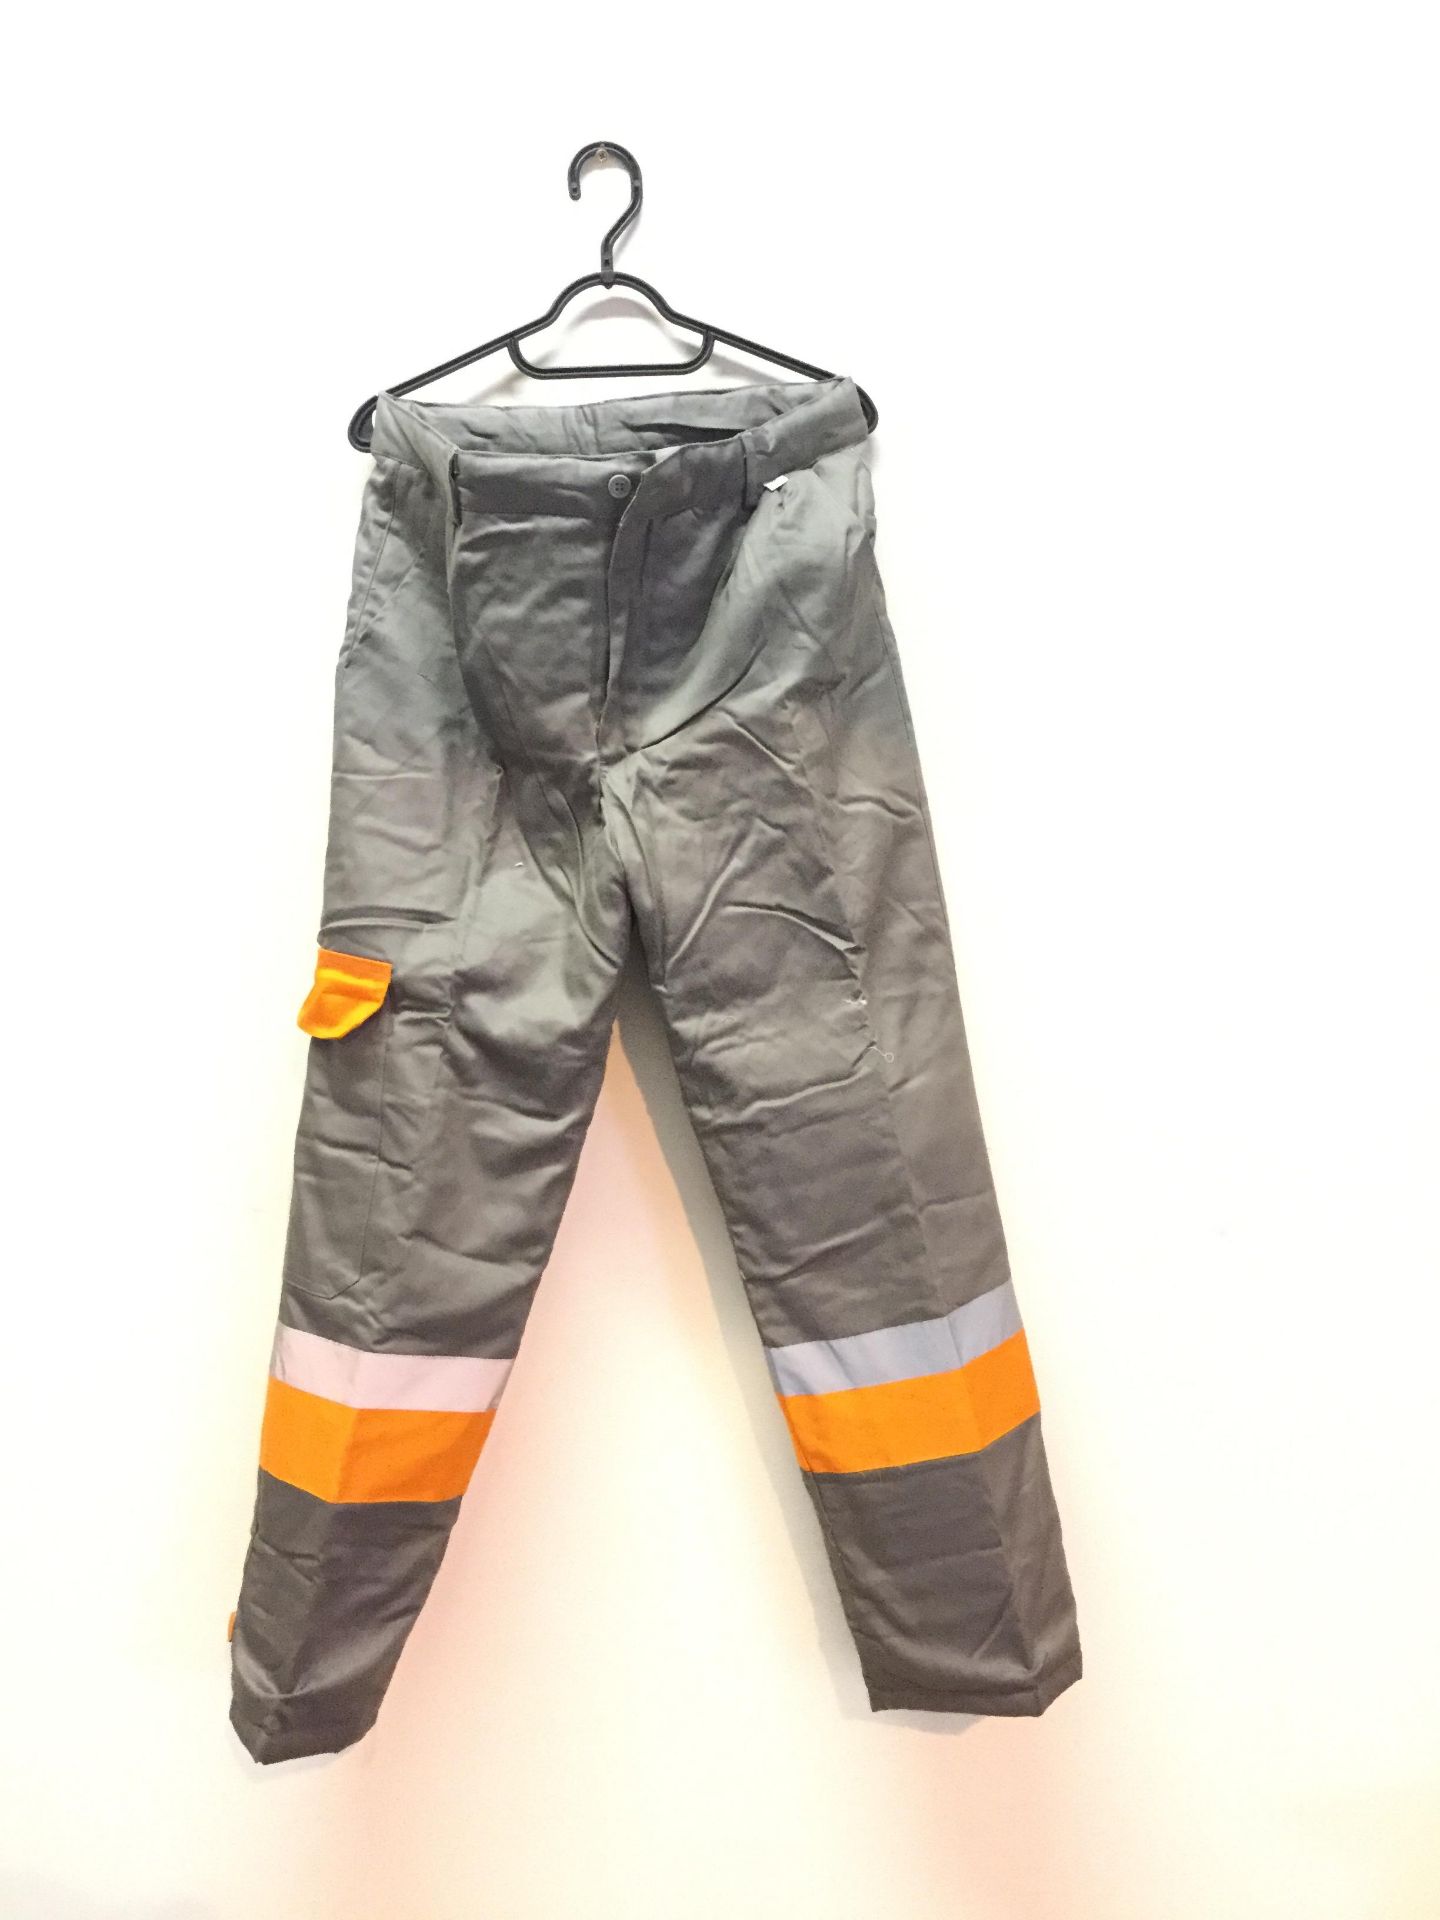 Flame Retardant Winter Trousers - Size 56